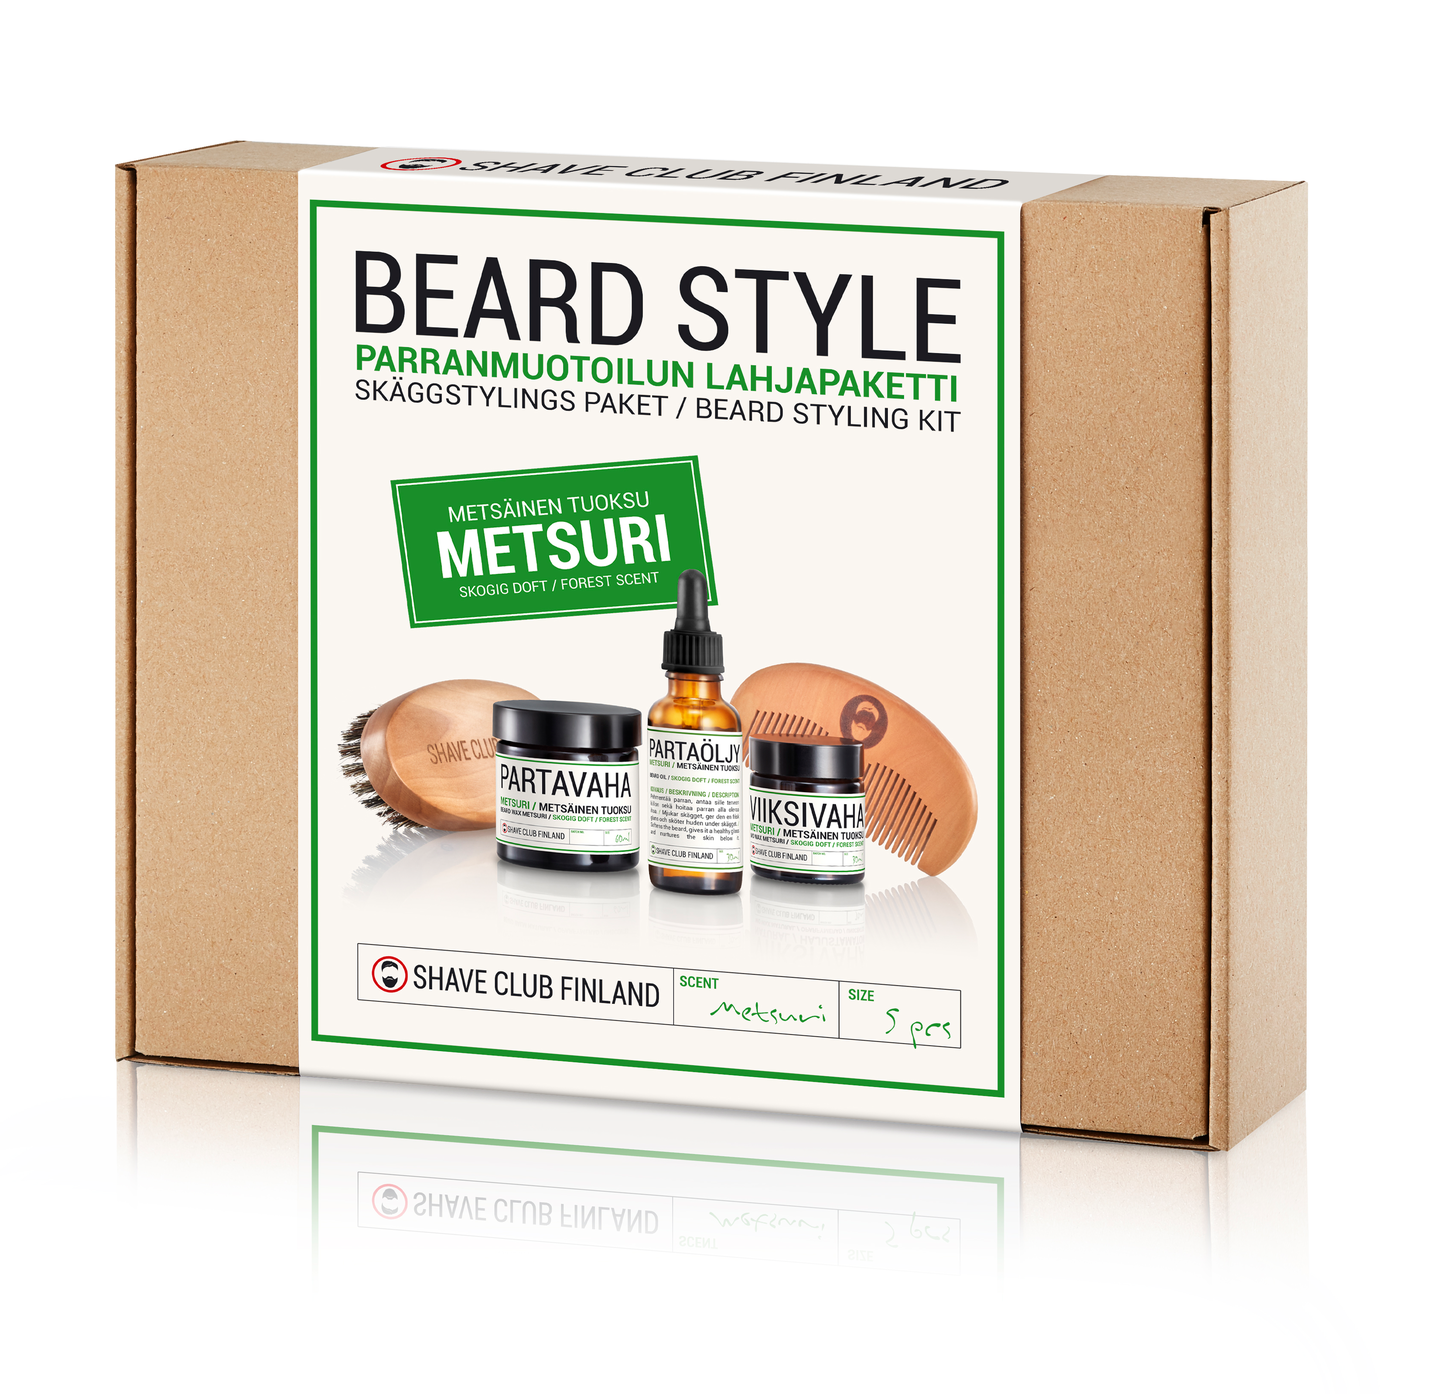 Shave Club Finland Metsuri Beard style kit